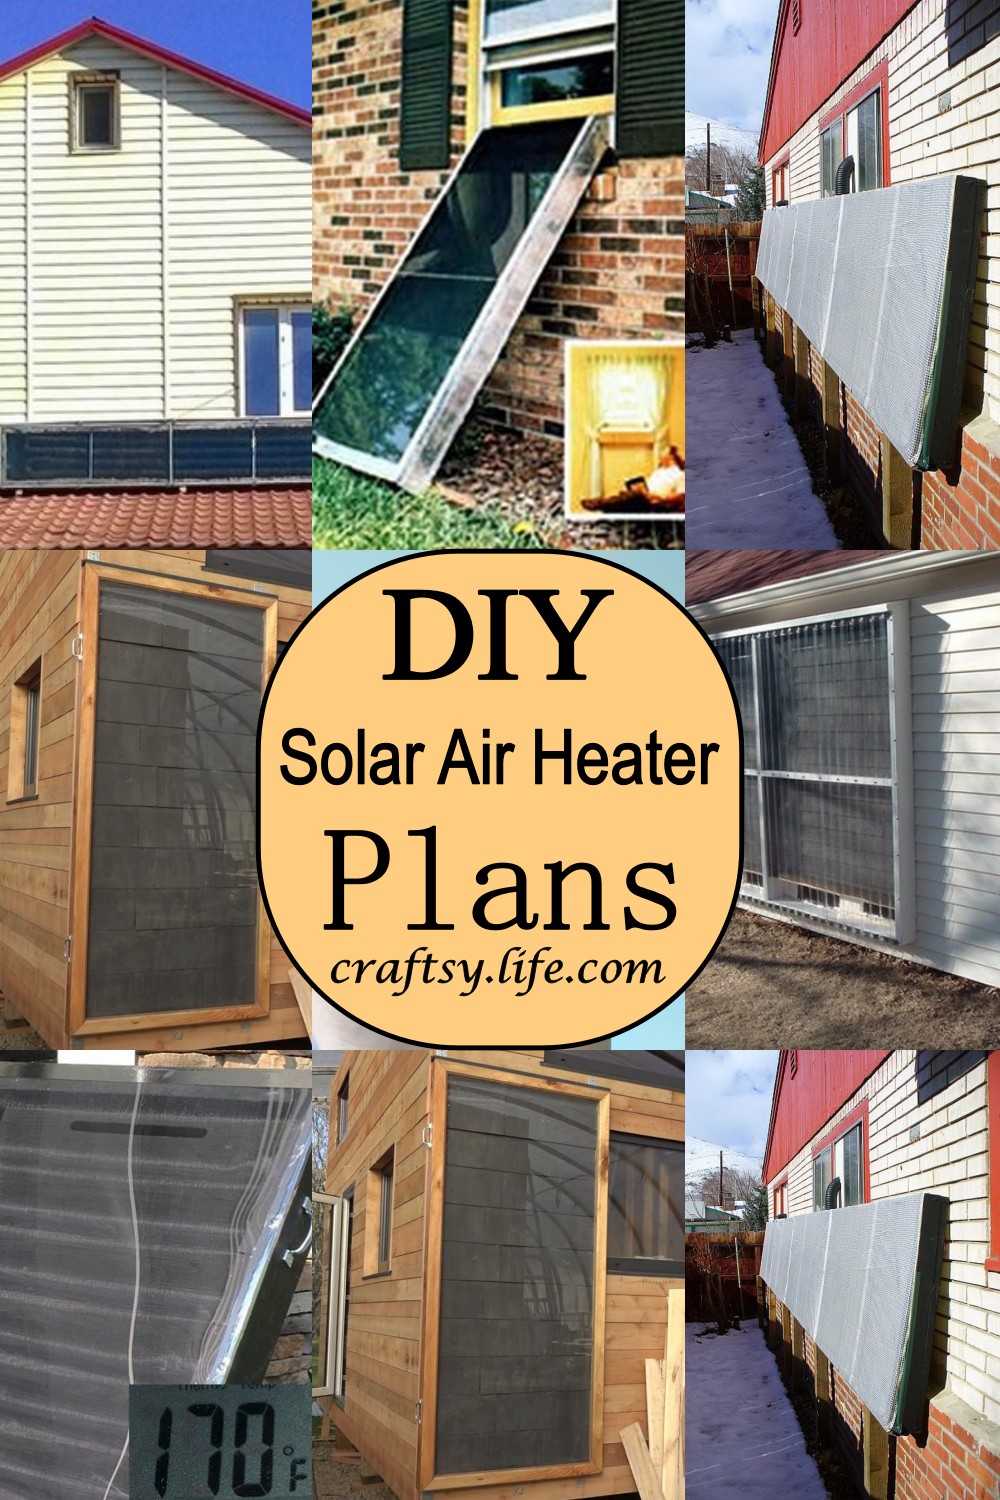 DIY Solar Air Heater Plans